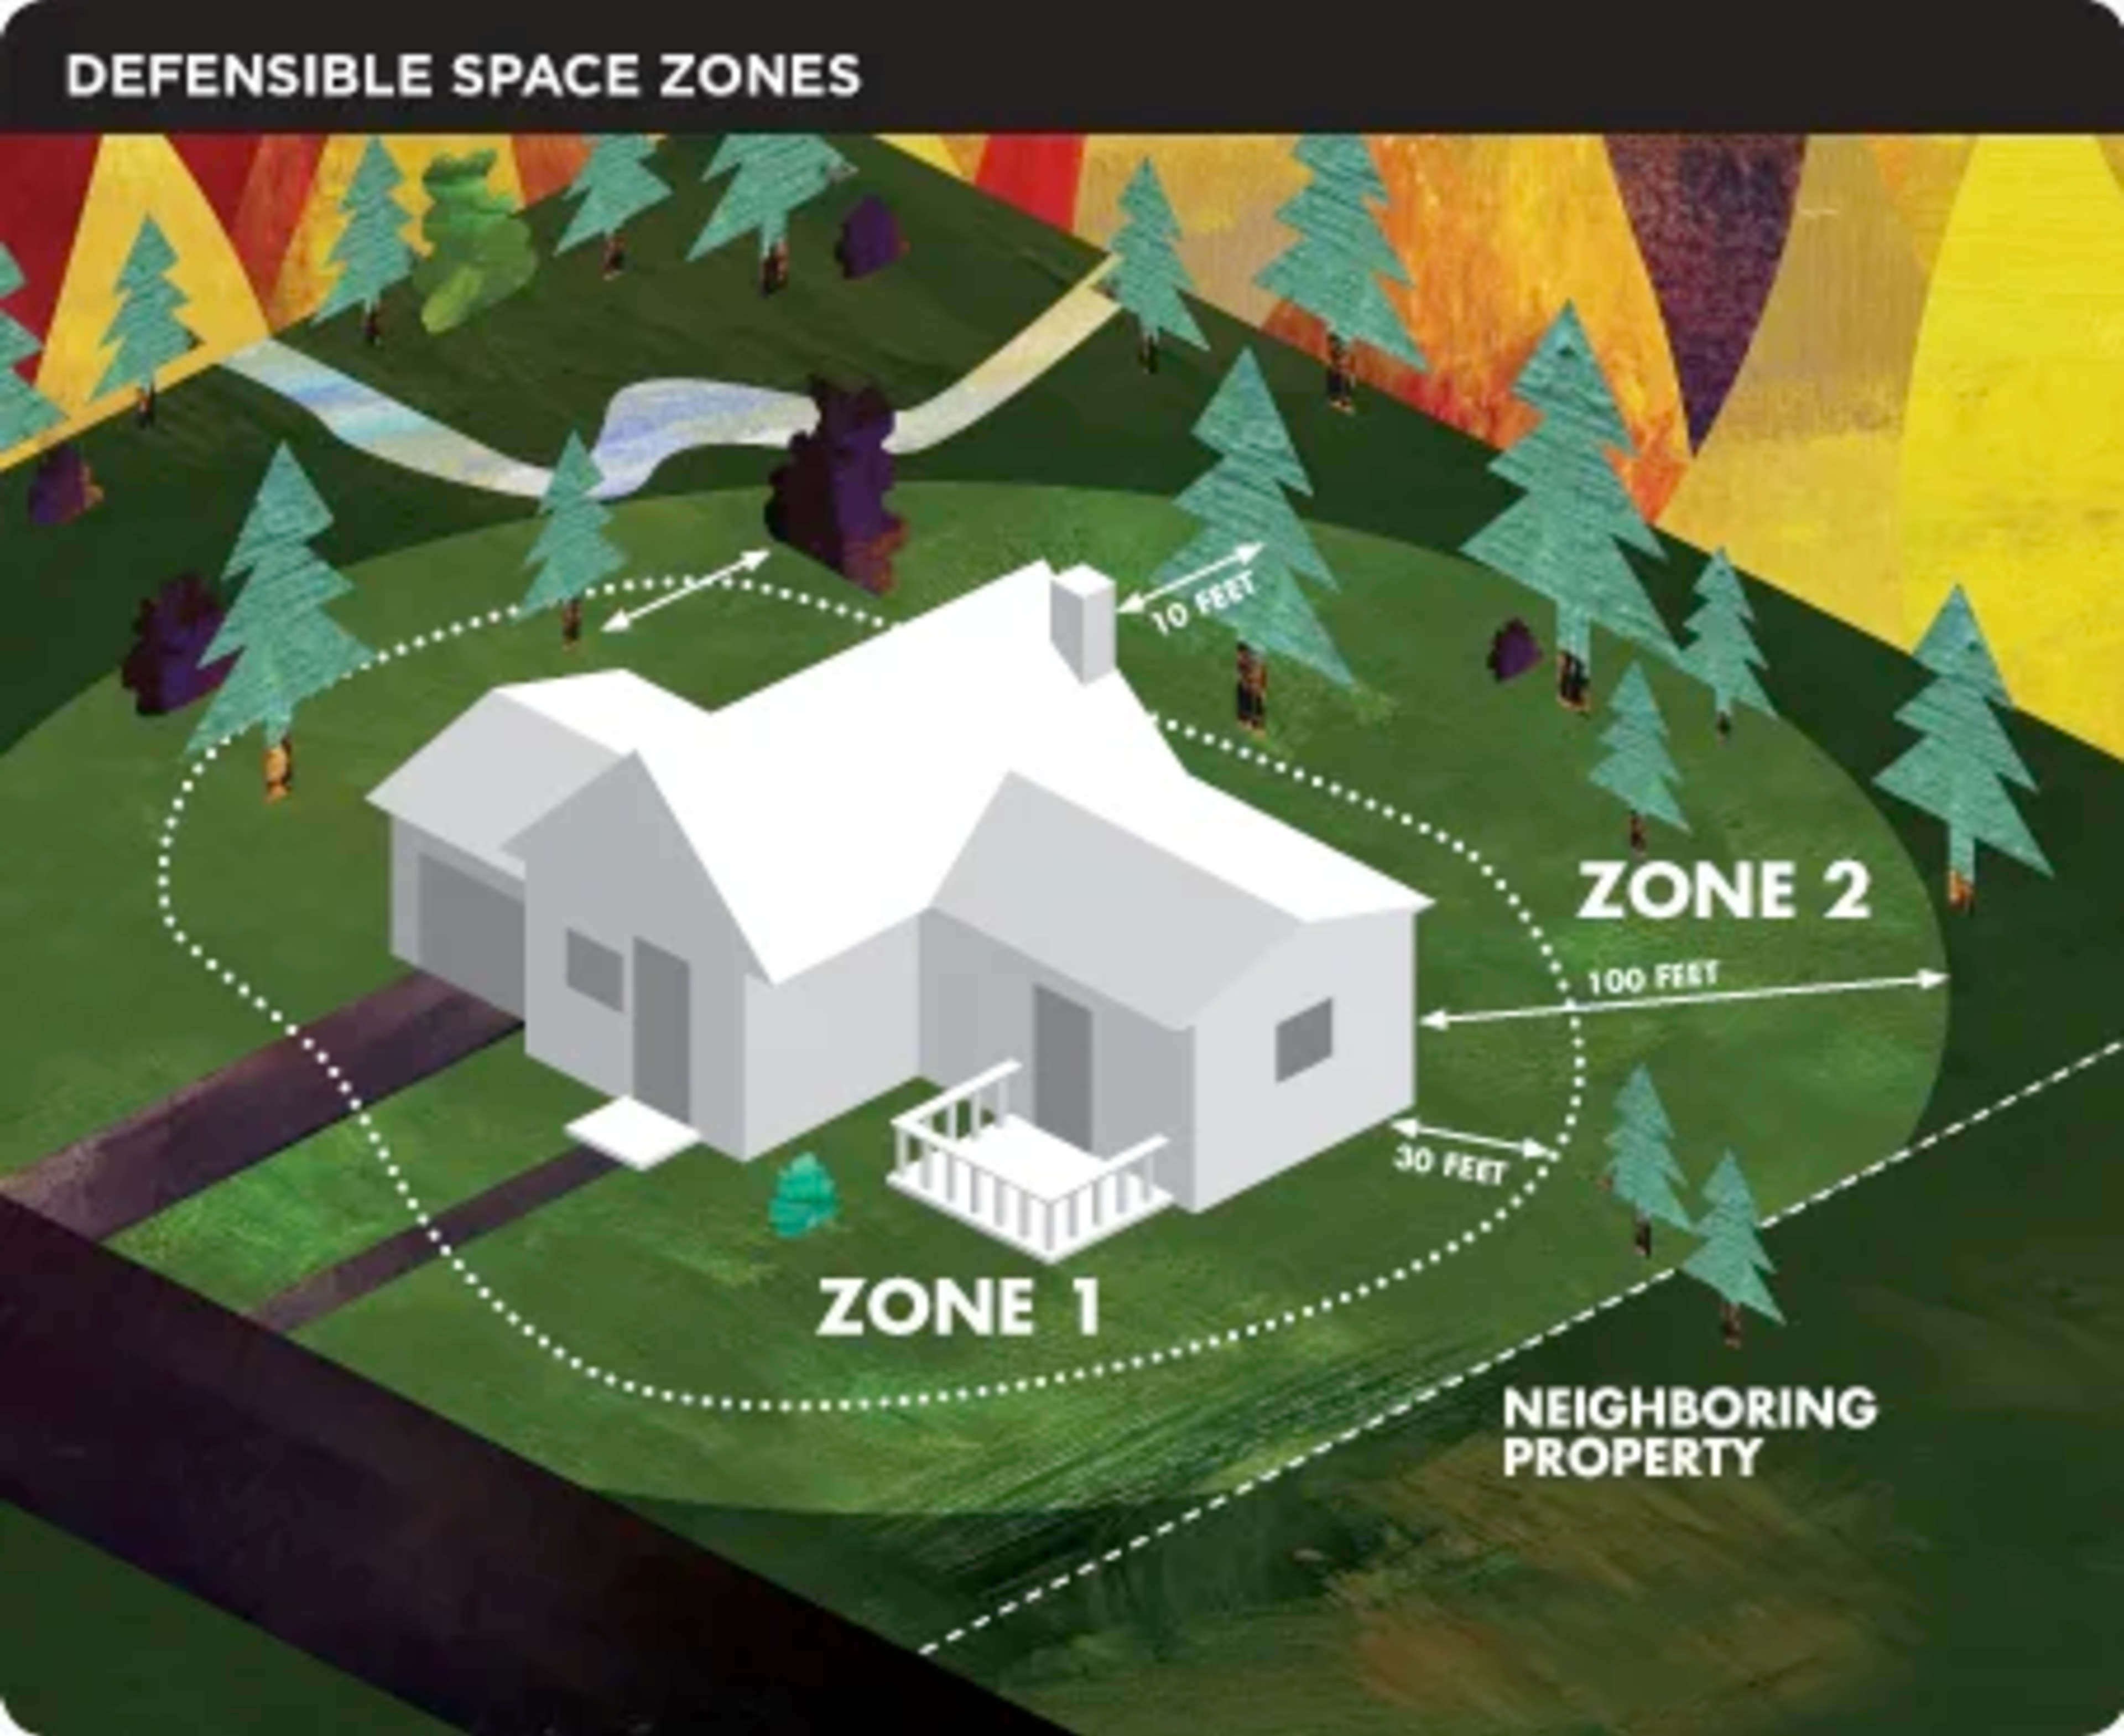 Defensible Space Zones - Wildfire Zones